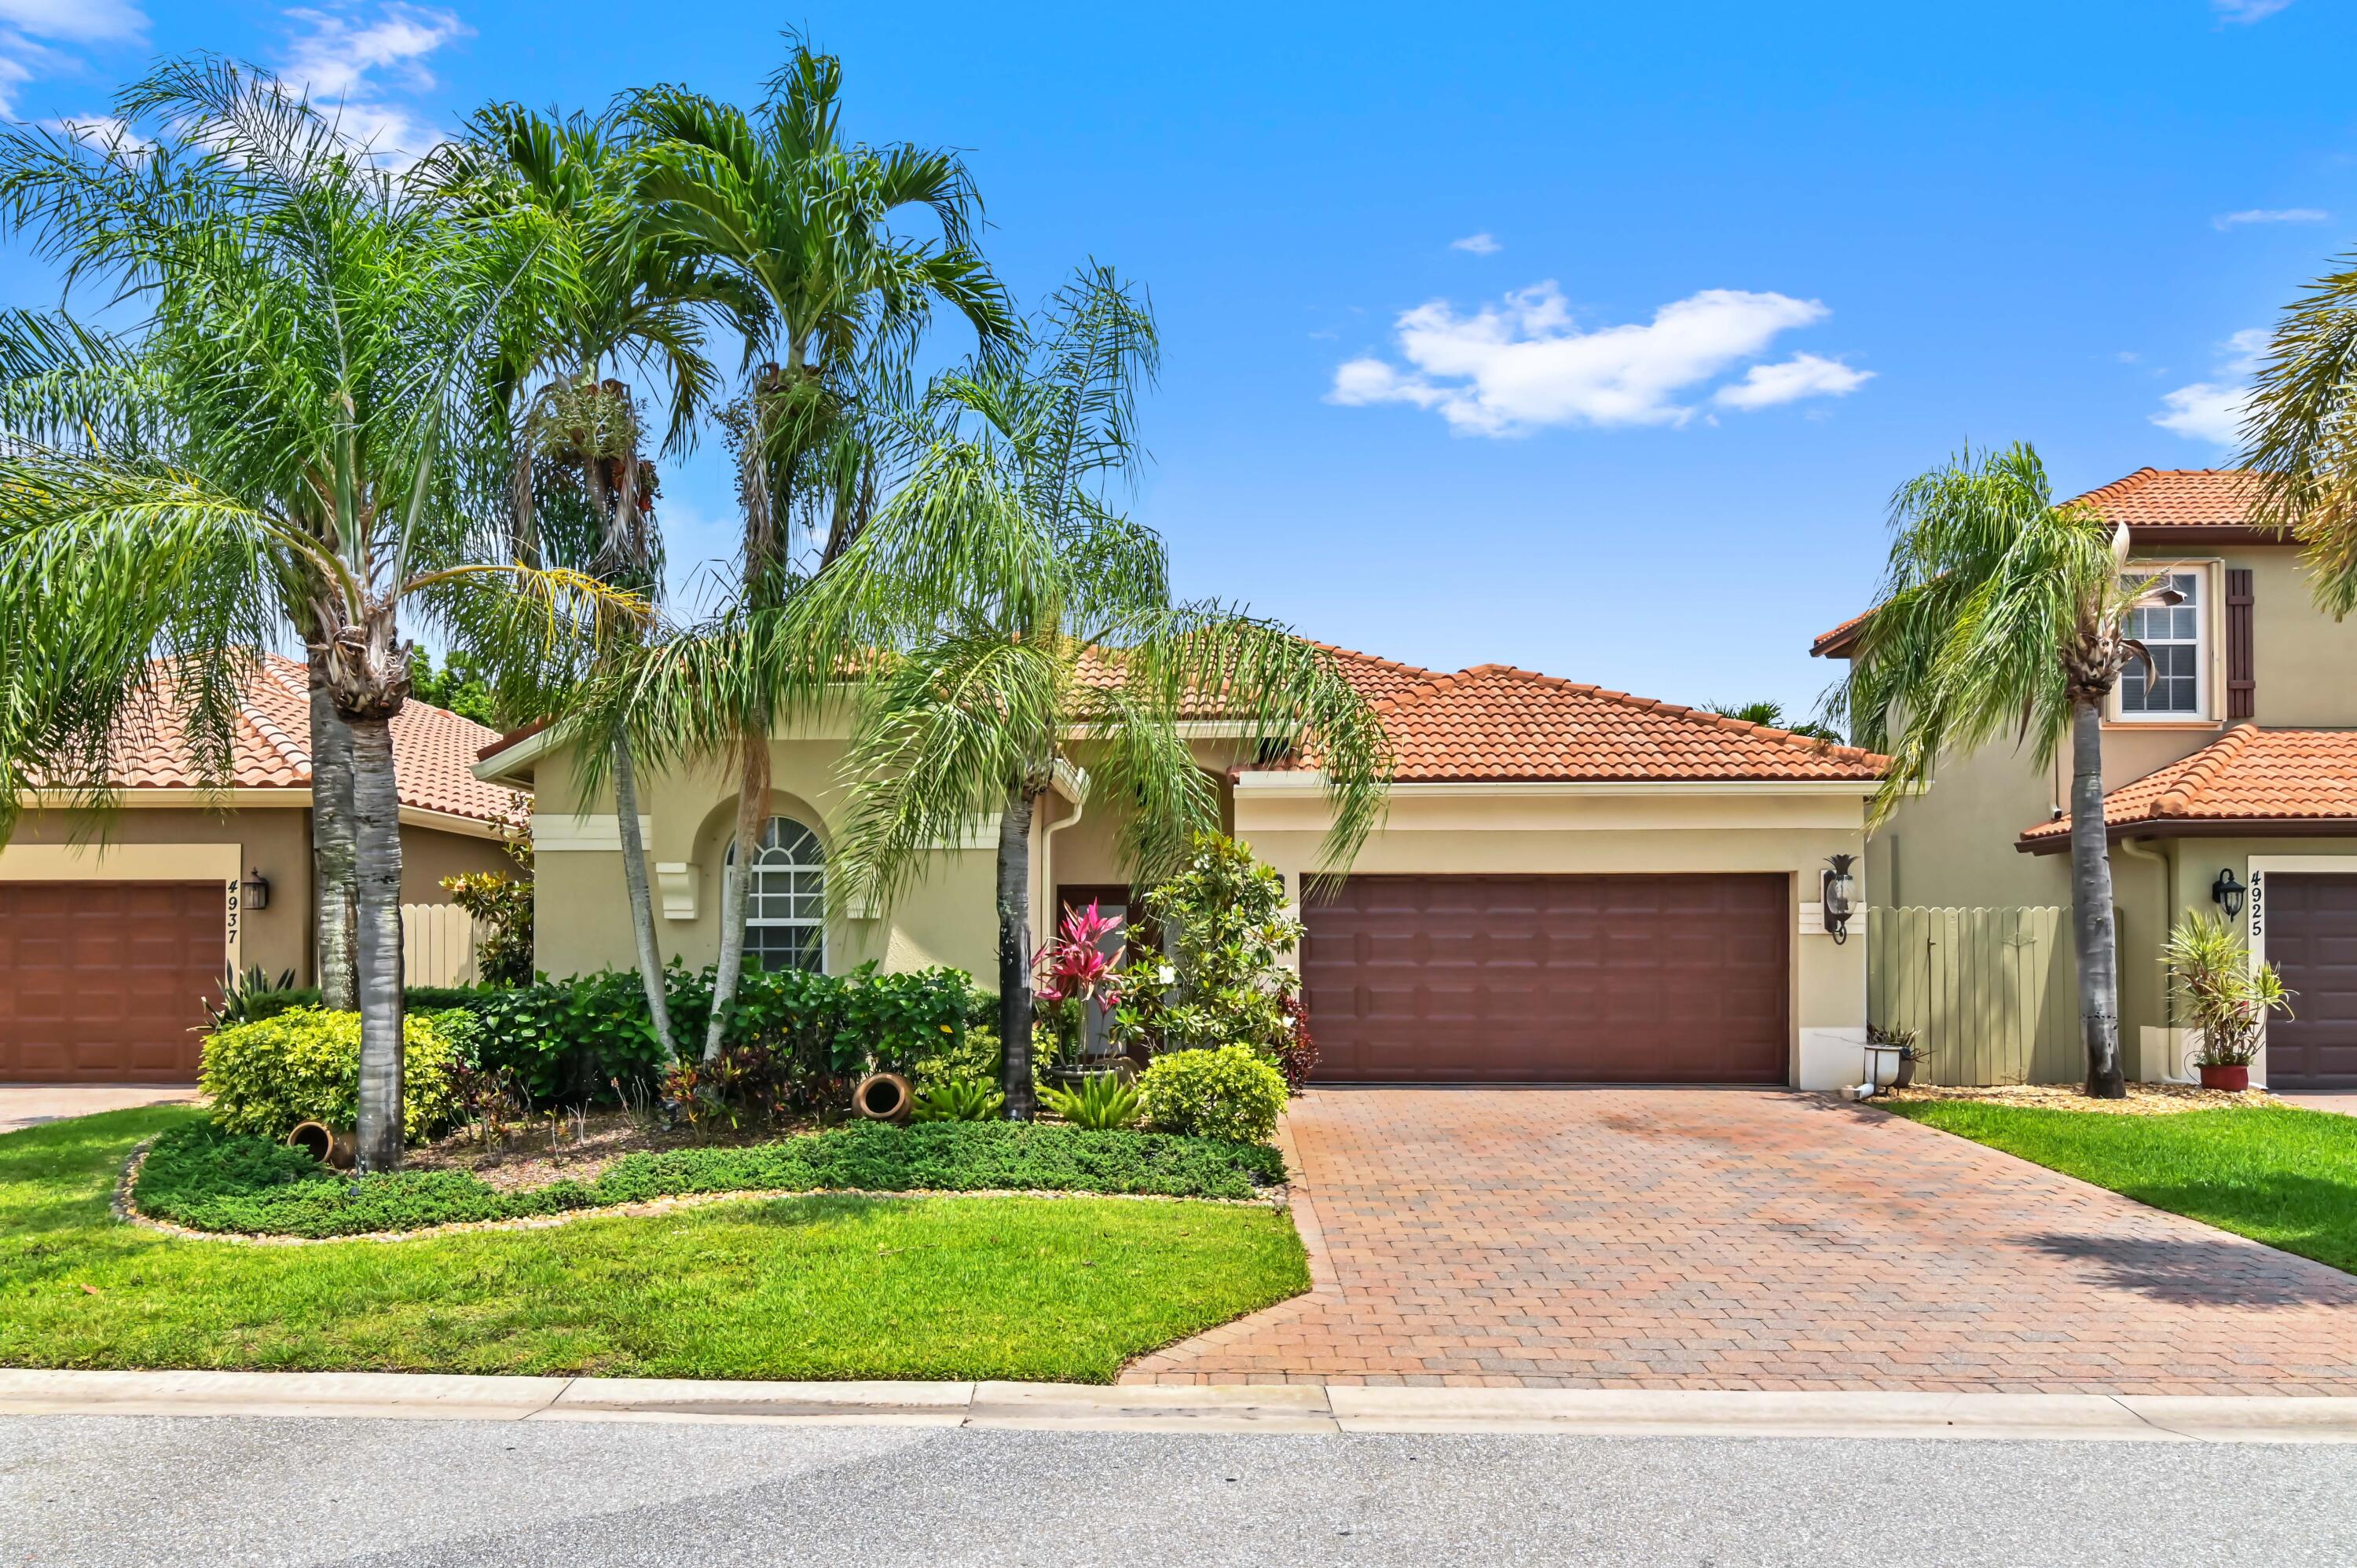 Property for Sale at 4931 Red Avocado Court, Boynton Beach, Palm Beach County, Florida - Bedrooms: 4 
Bathrooms: 3  - $649,000